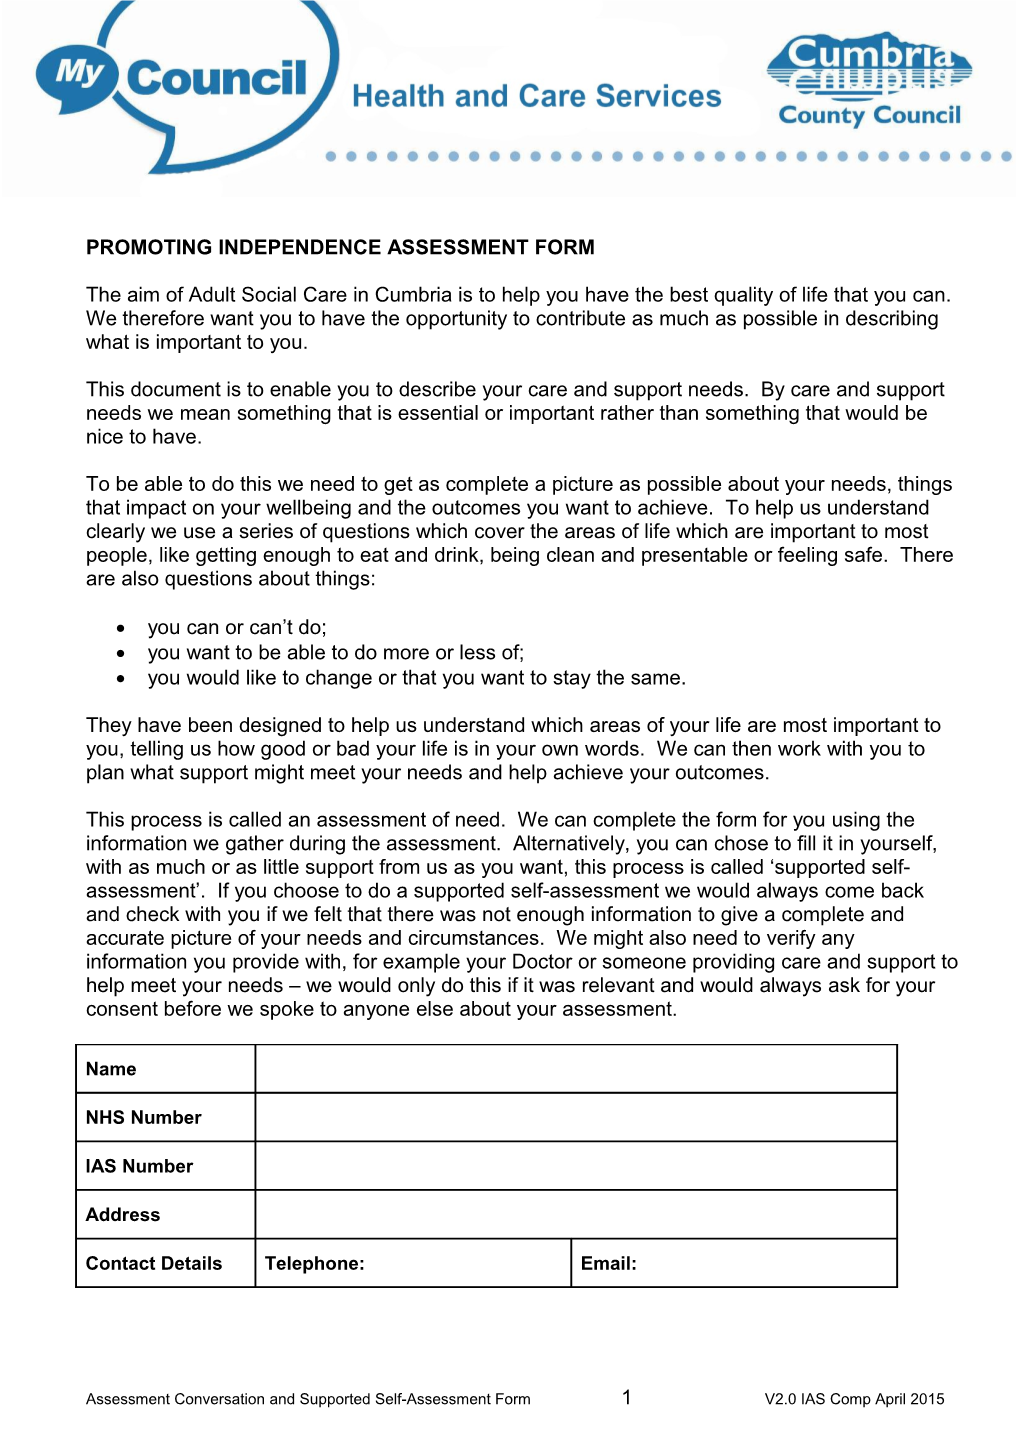 Promoting Independence Assessment Form